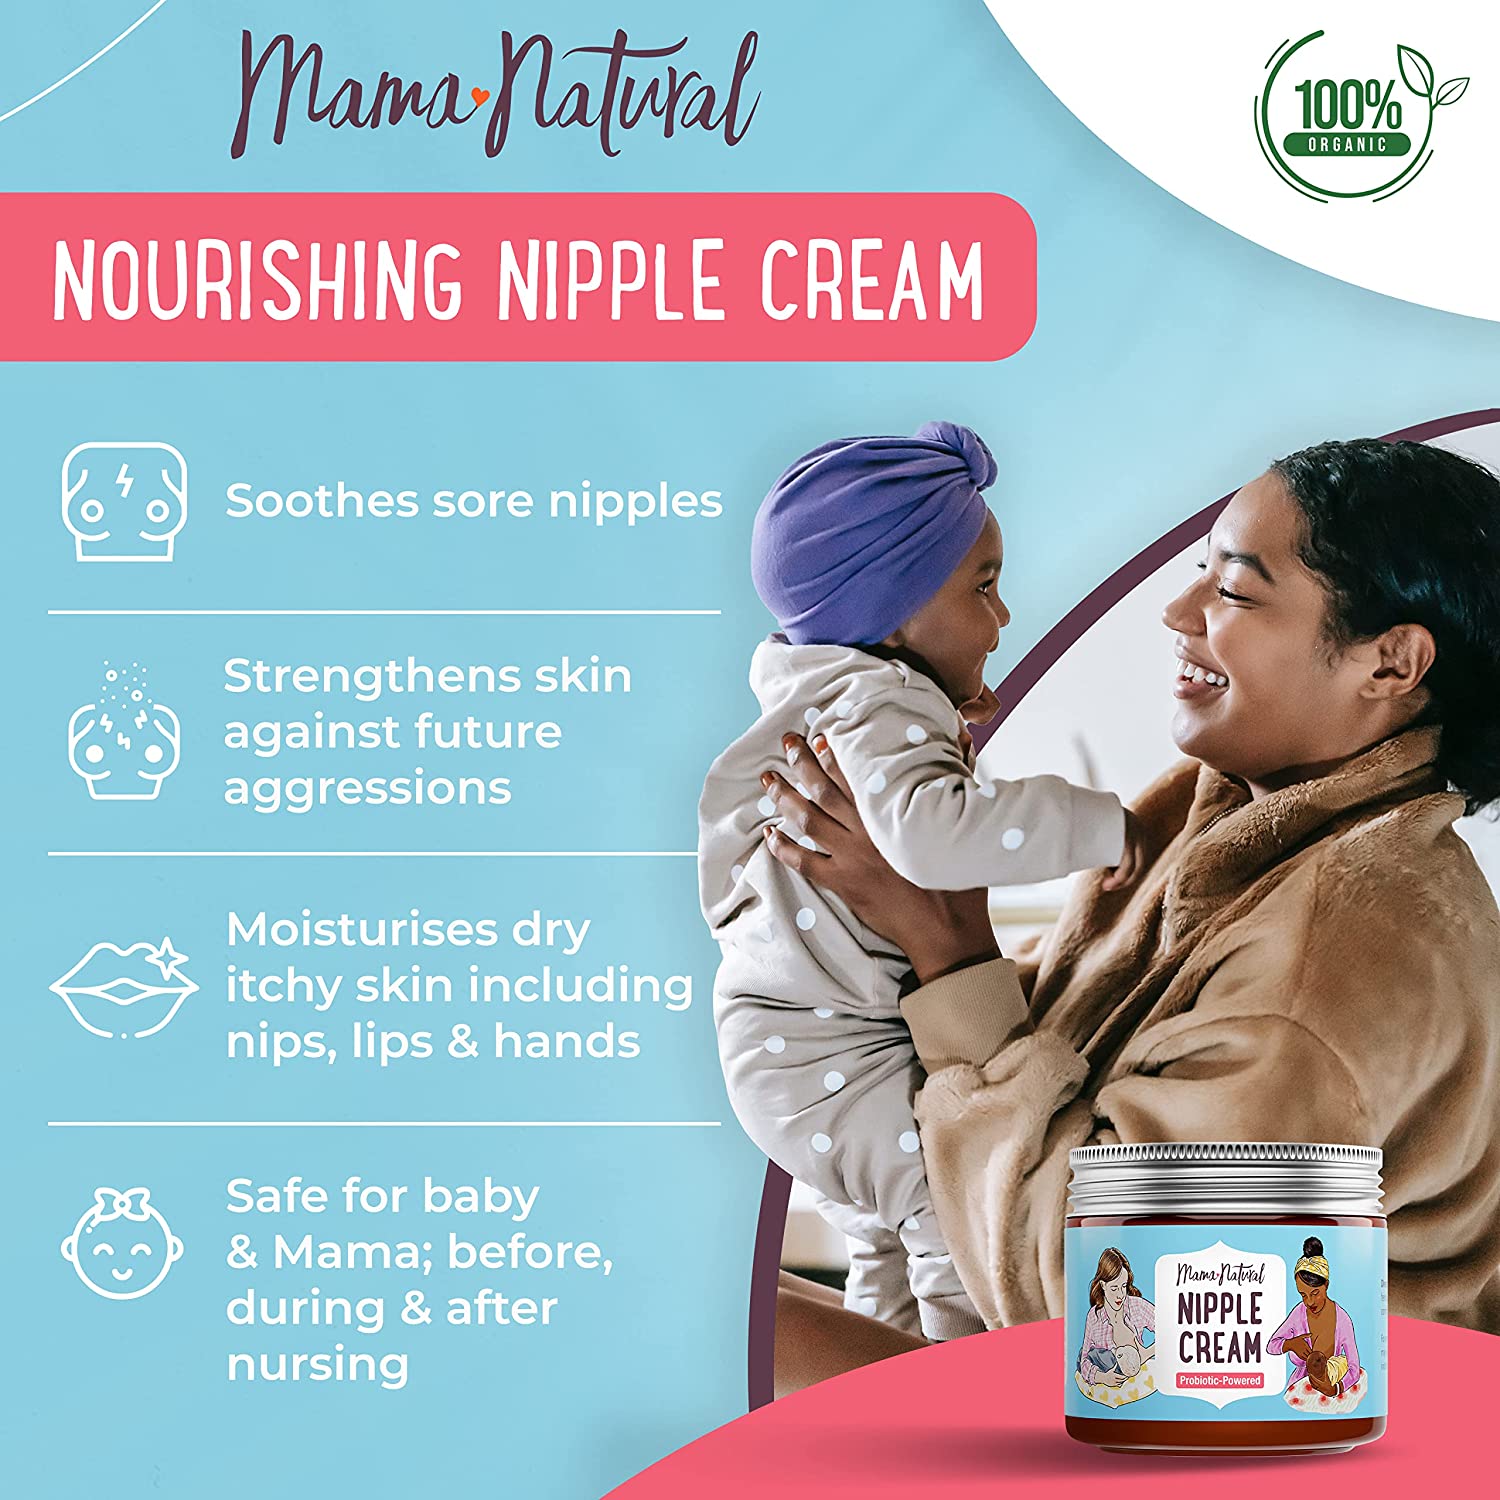 All-Natural Nipple Cream for Breastfeeding